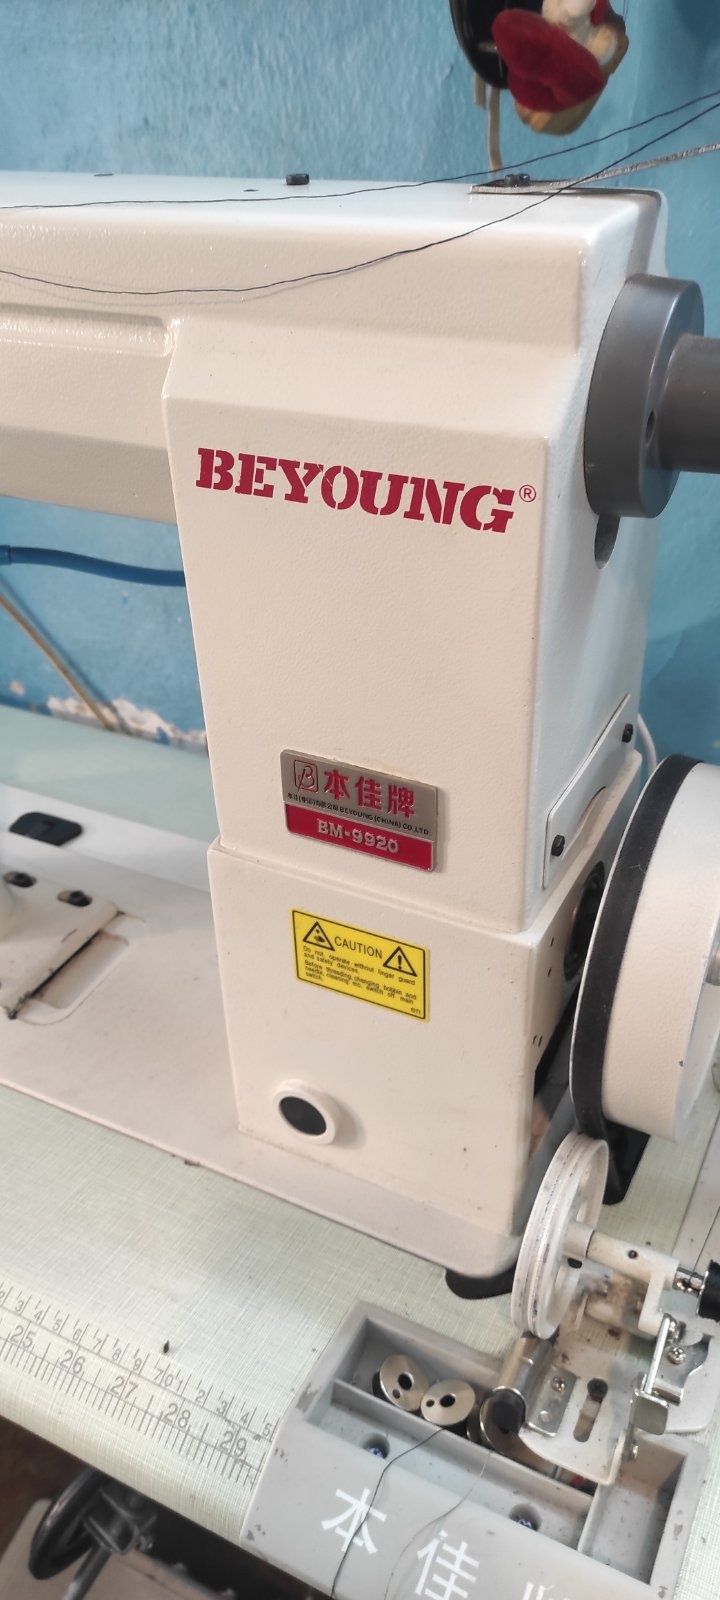 Beyoung  BM-9920